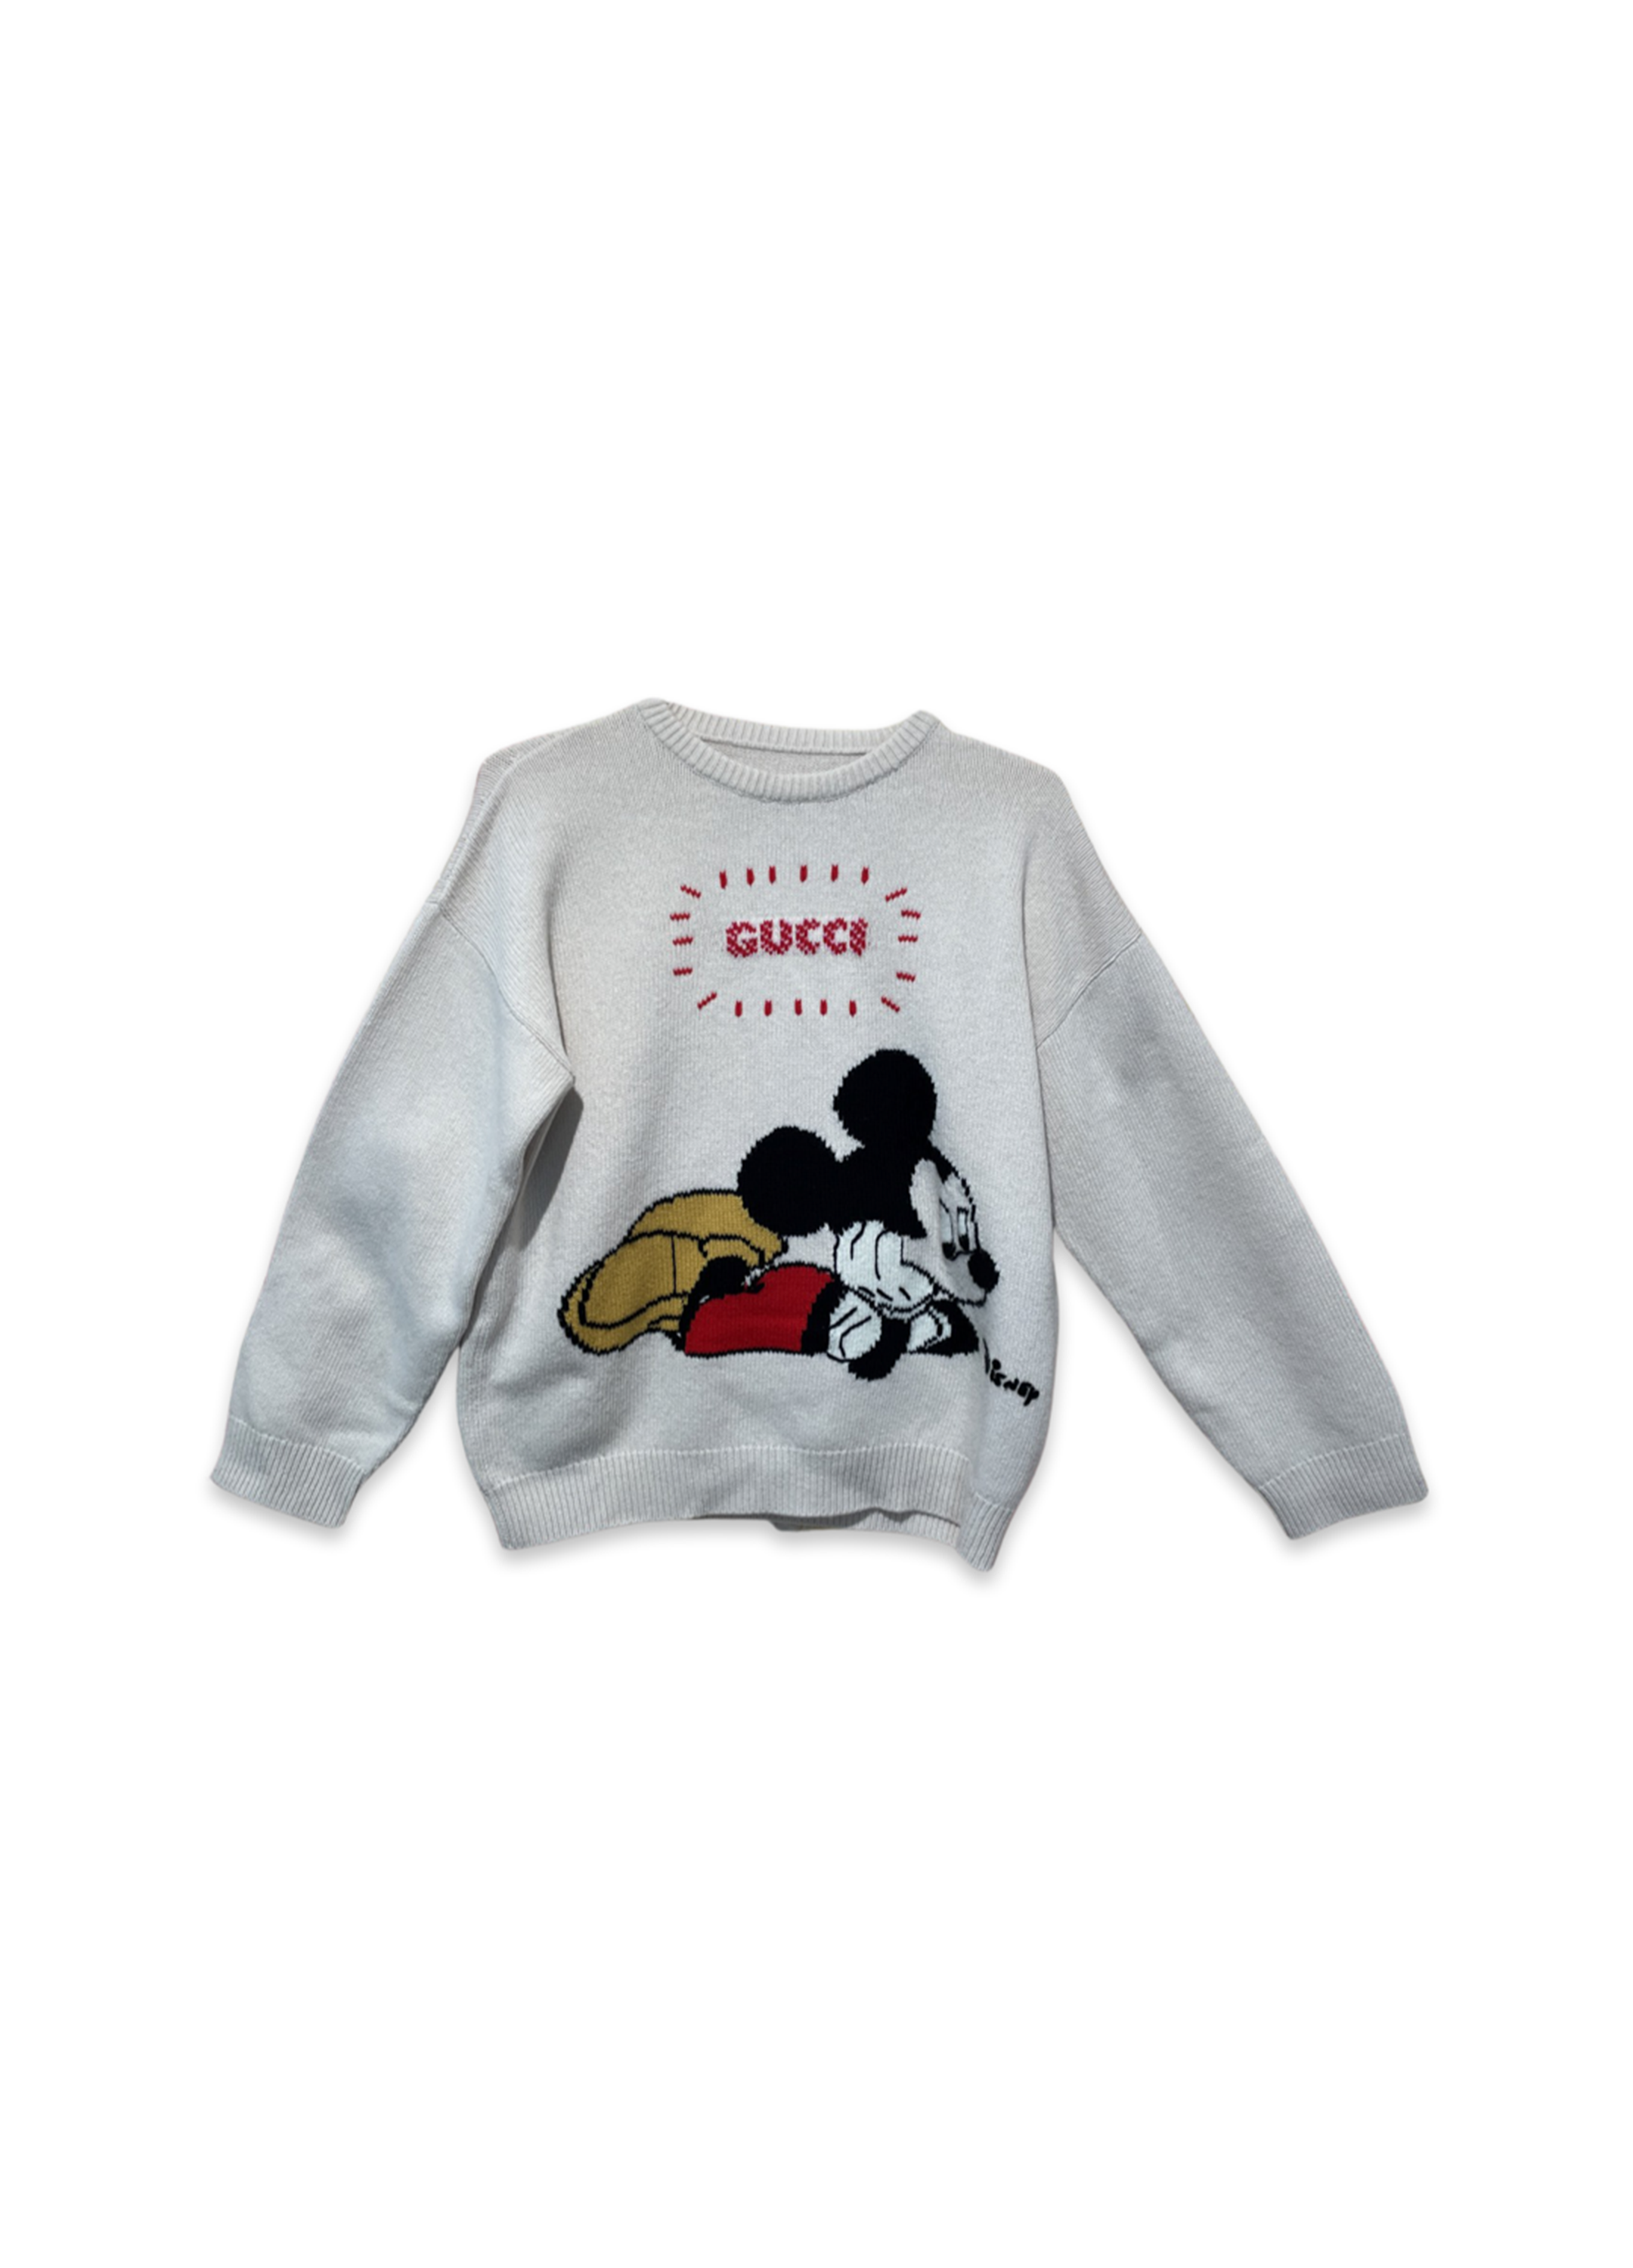 Gucci x Disney Mickey Mouse Sweater – Michèle's Chleiderstübli